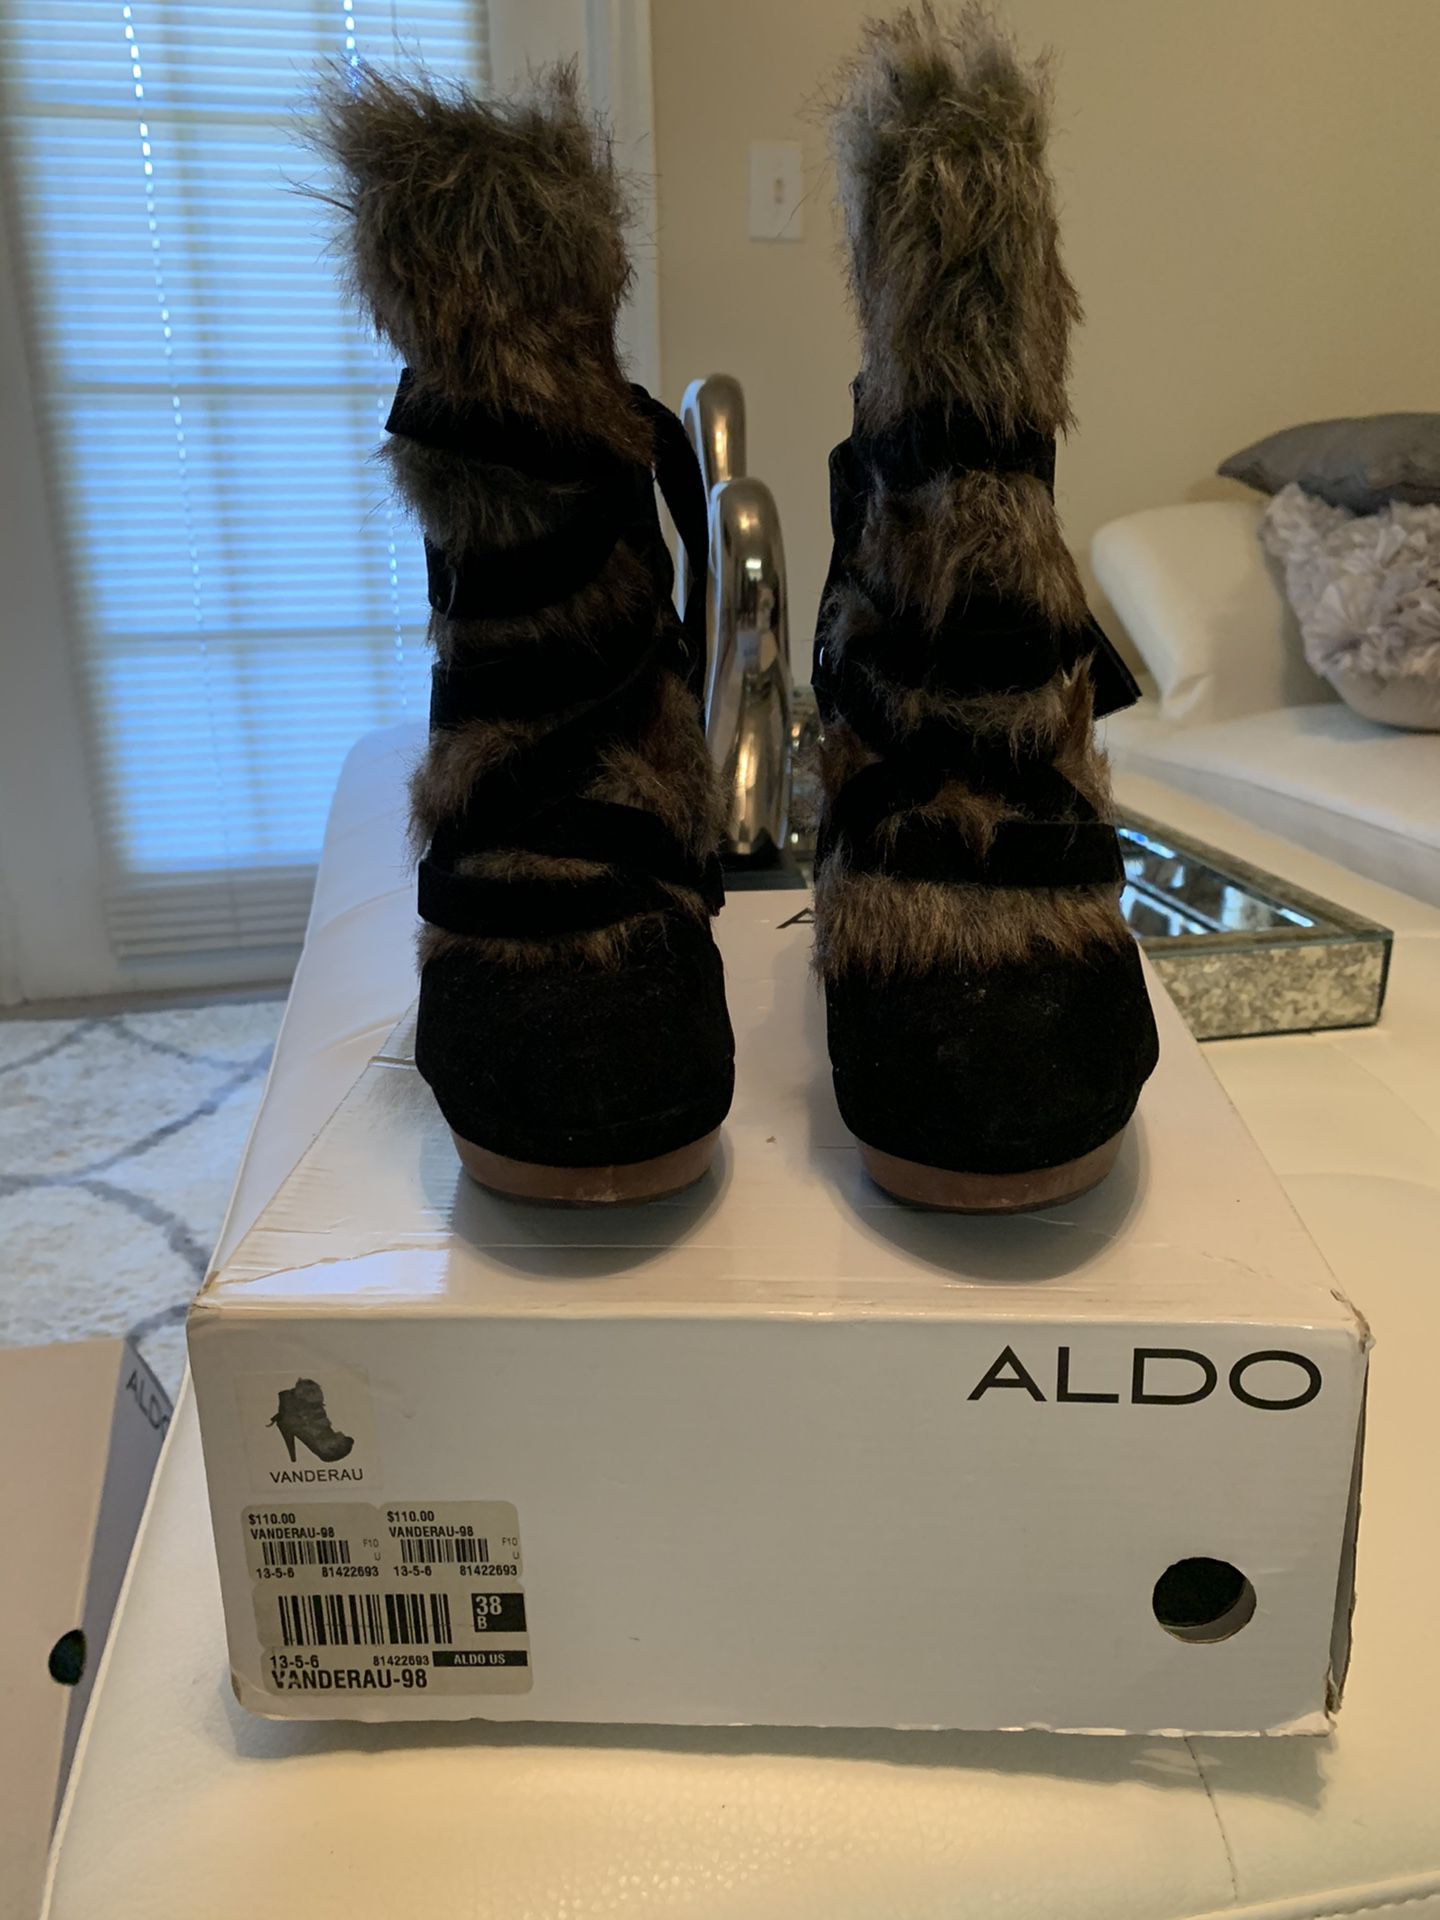 Aldo women’s boot size 38 (7.5)